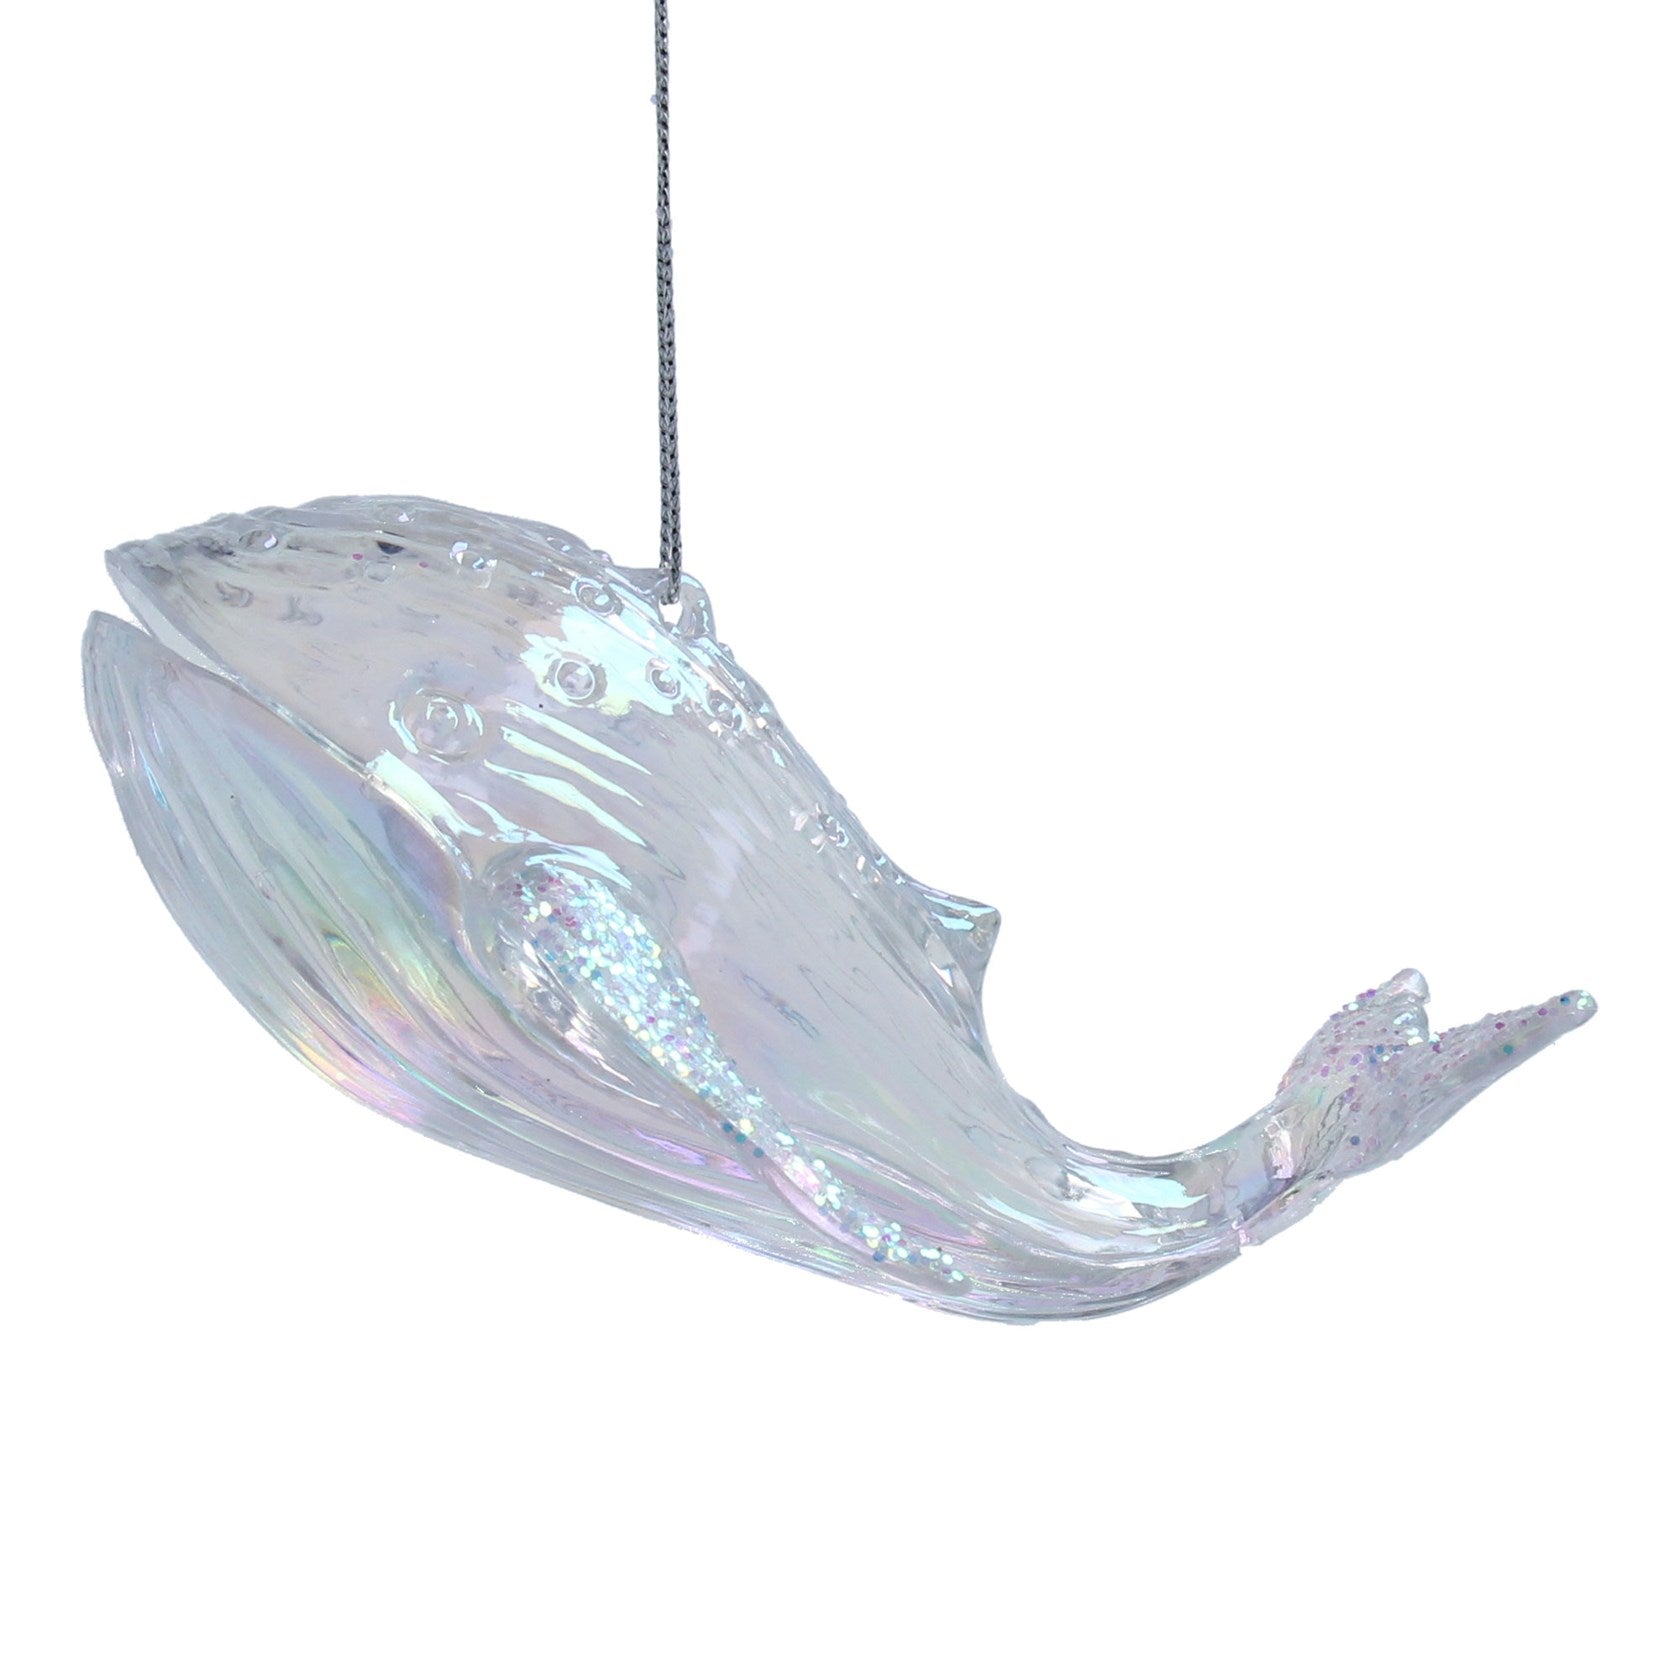 Hanging Whale Decoration - Iridescent